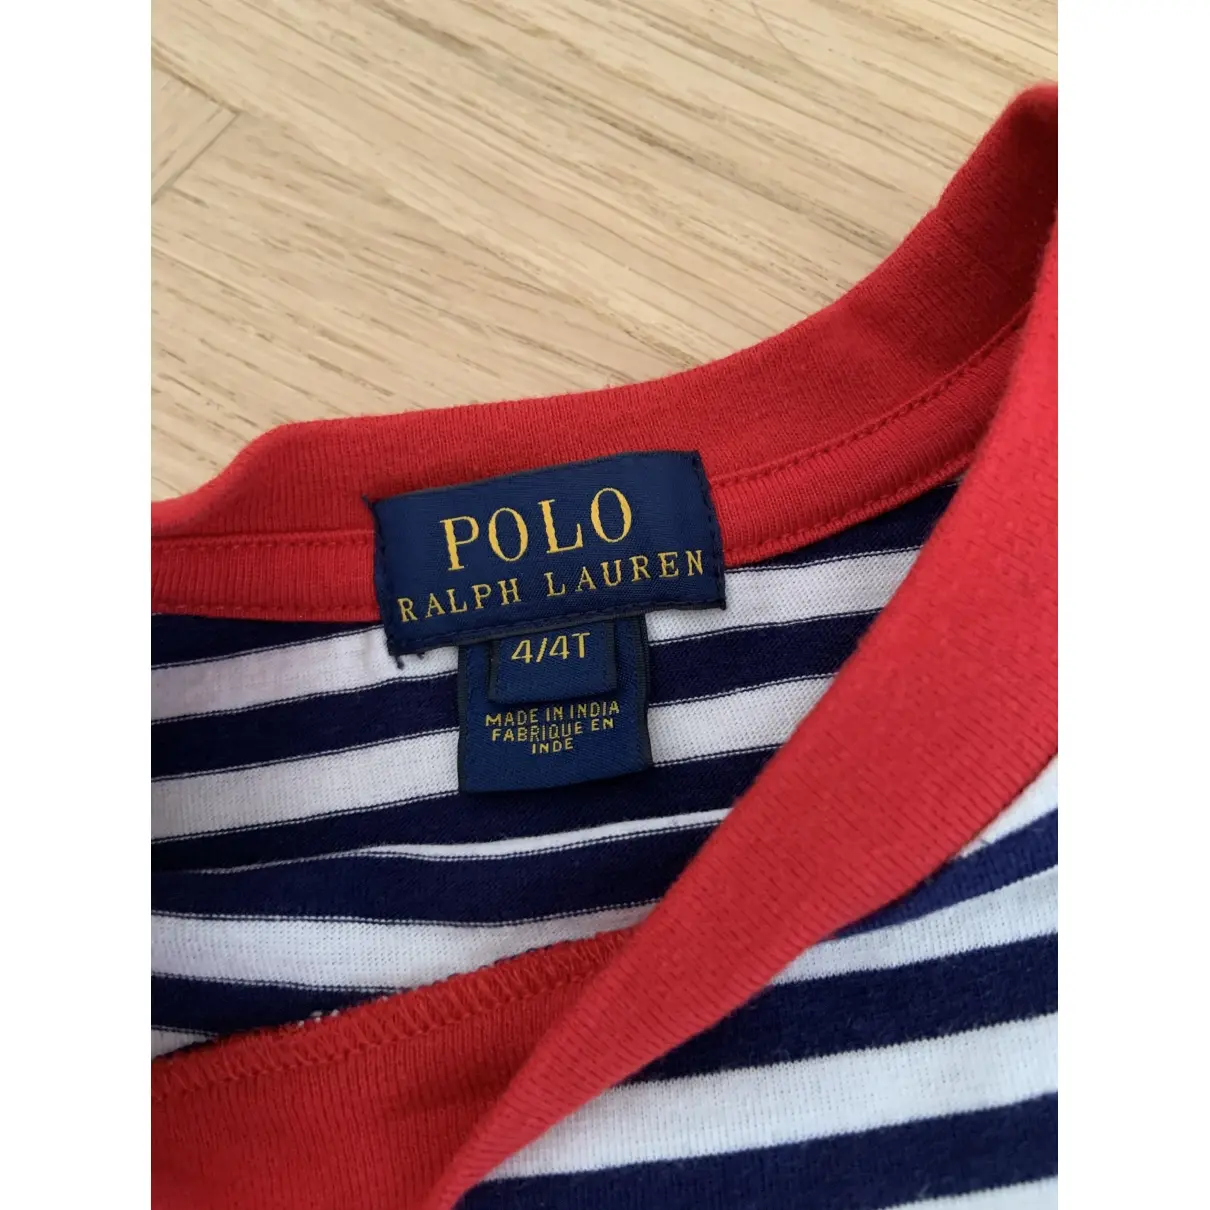 Buy Polo Ralph Lauren Blue Cotton Top online